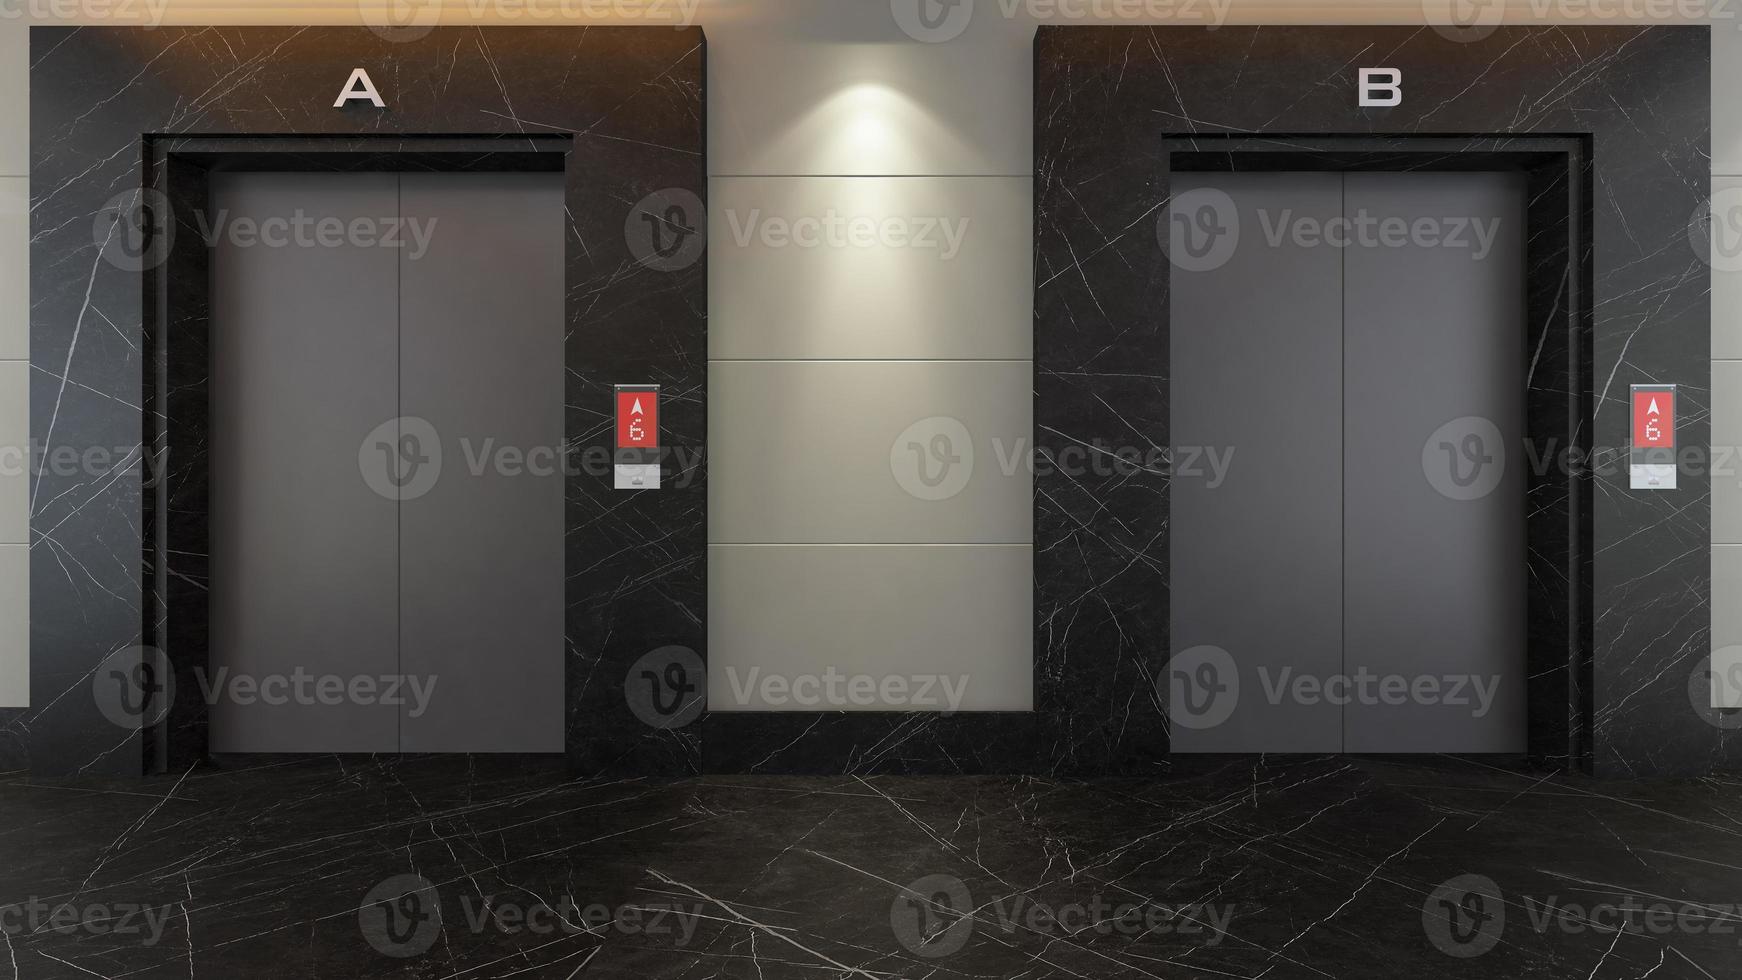 representación 3d del concepto de diseño de ascensor moderno. foto